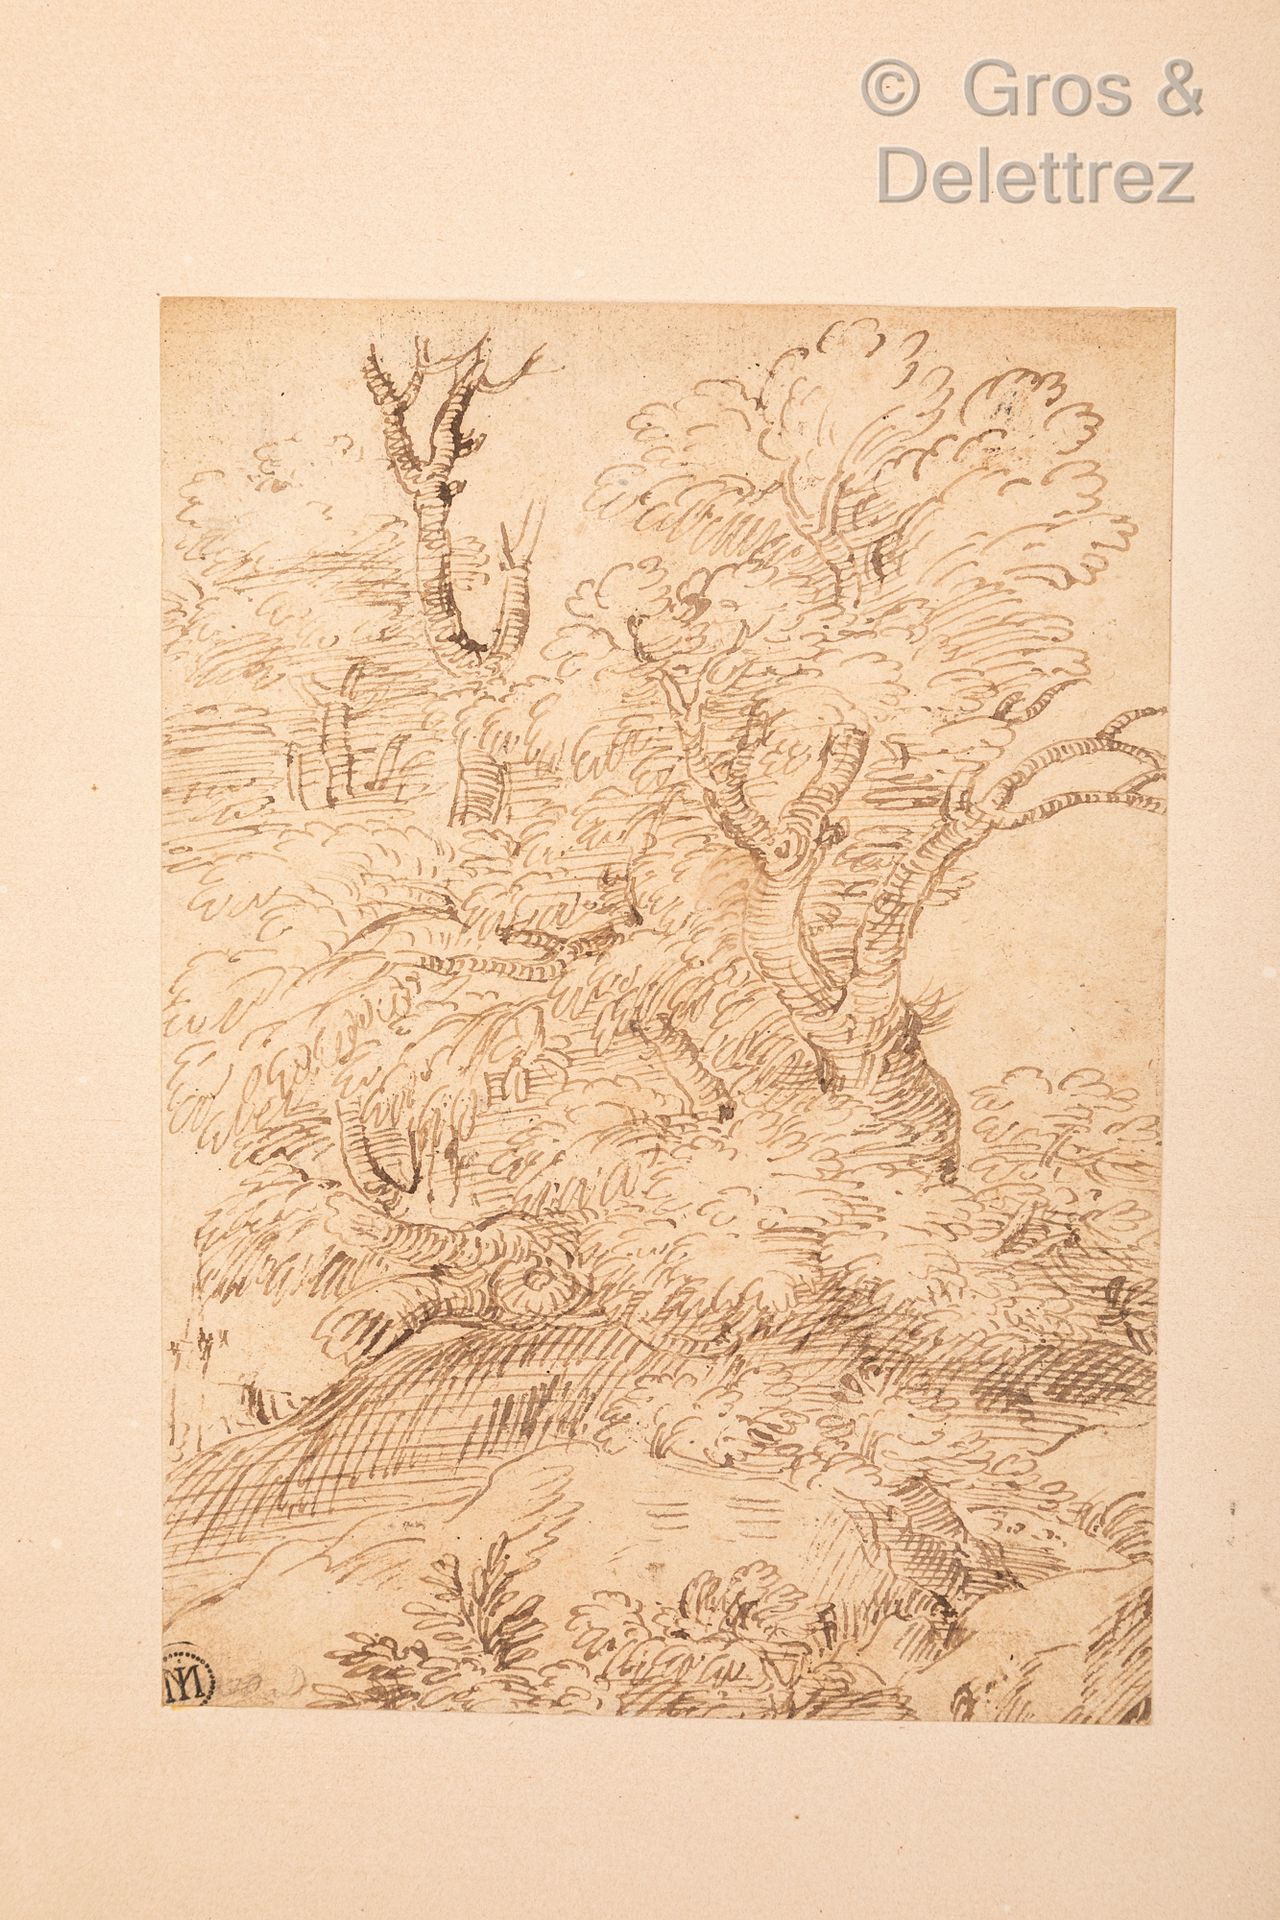 Null 博洛尼亚学校，17世纪

岬角上的一片树丛

钢笔和棕色墨水

23.5 x 16.7厘米。

未确定的收藏标记（L.1792）。